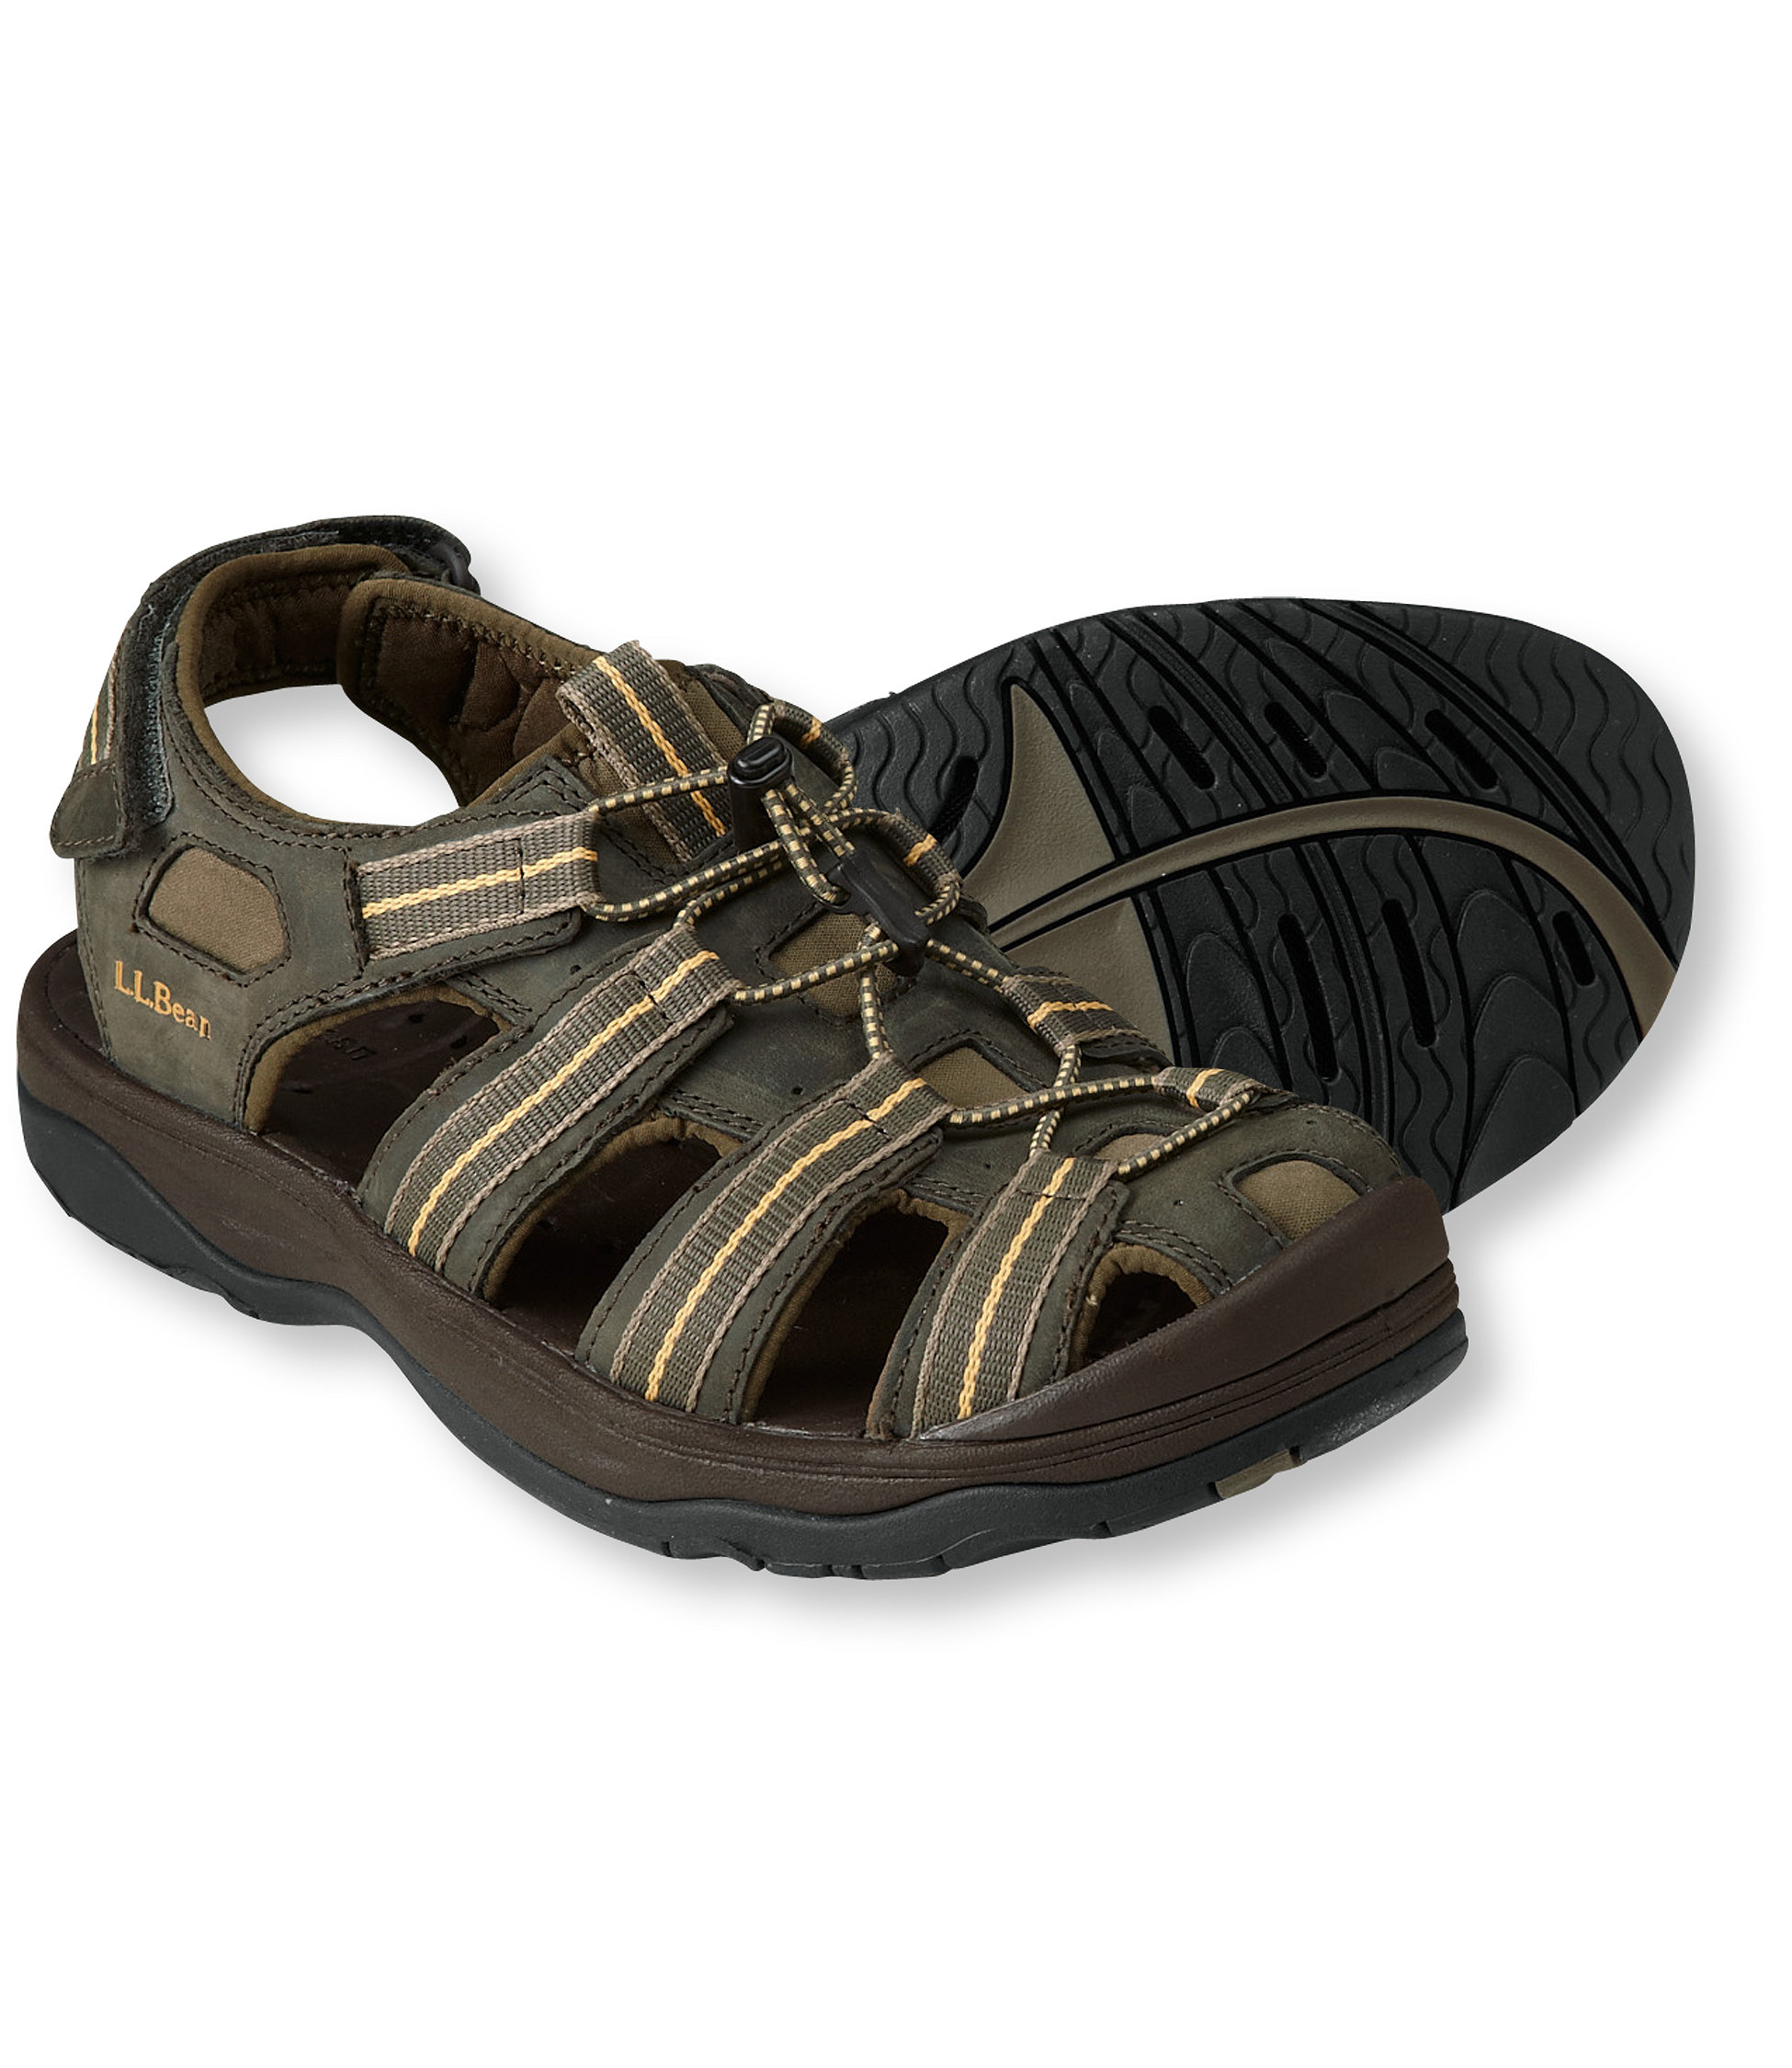 L.L.Bean Explorer Sandals Reviews 